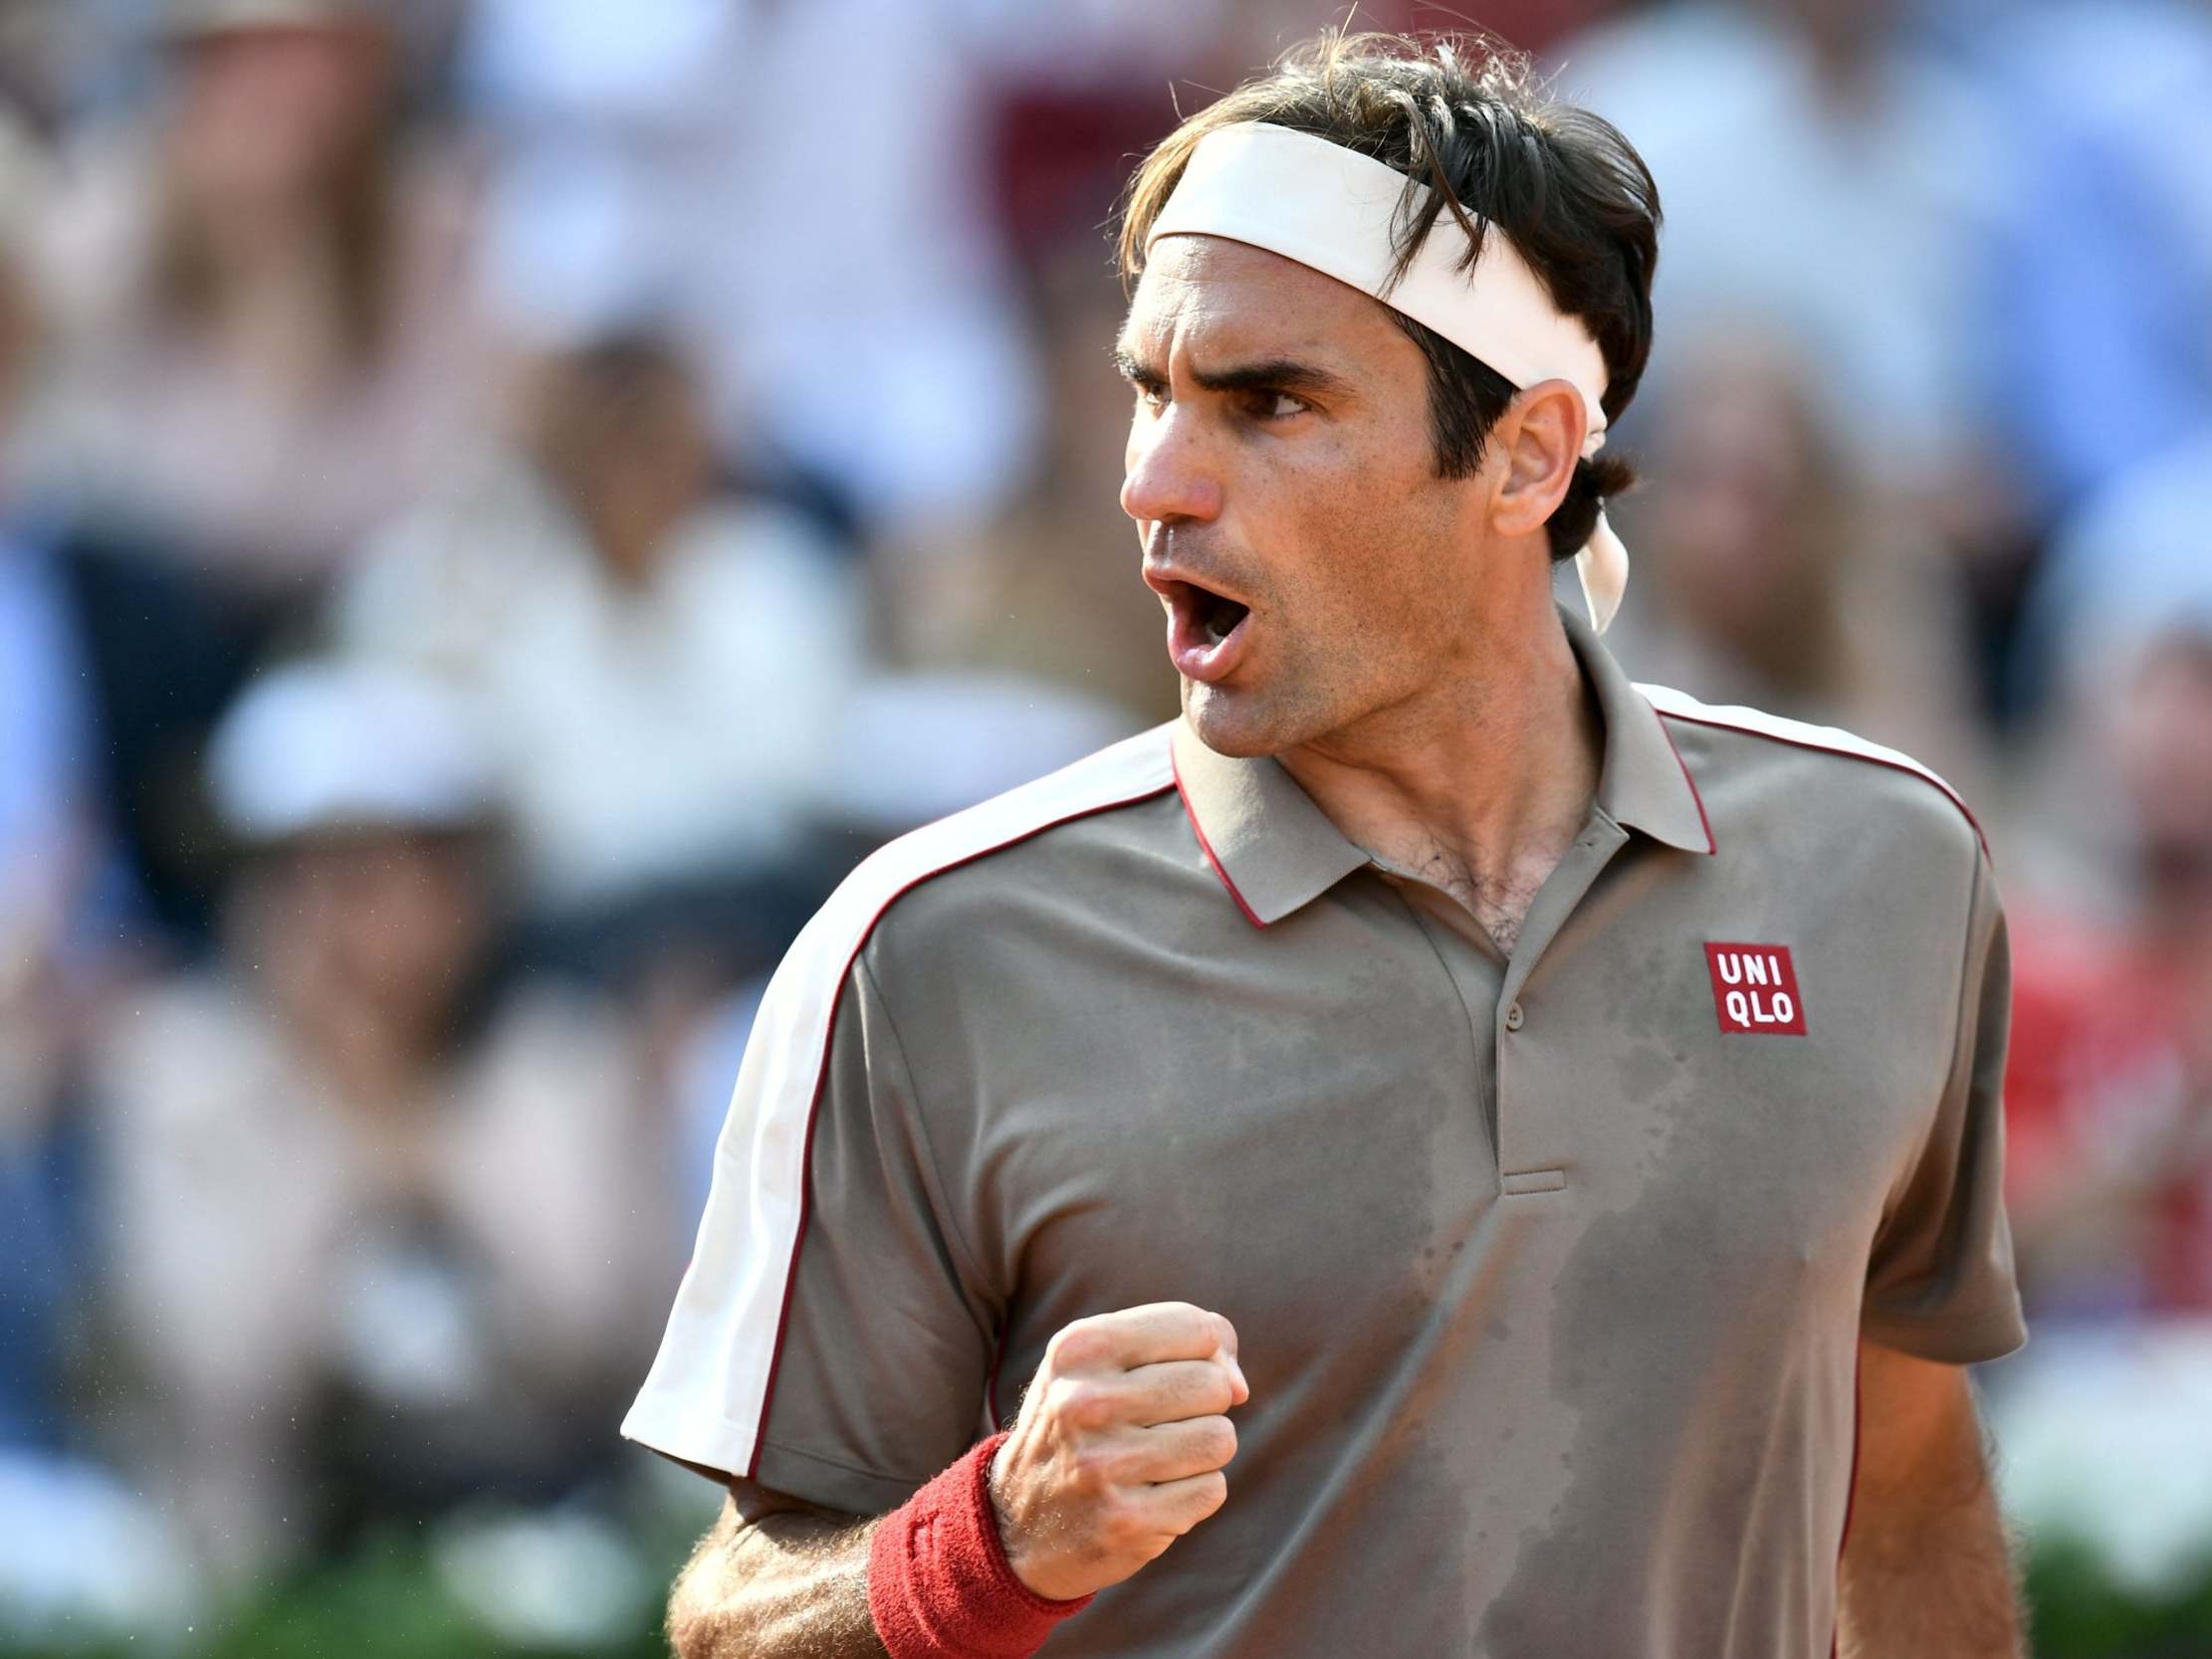 Federer faces Nadal in the last four at Roland Garros